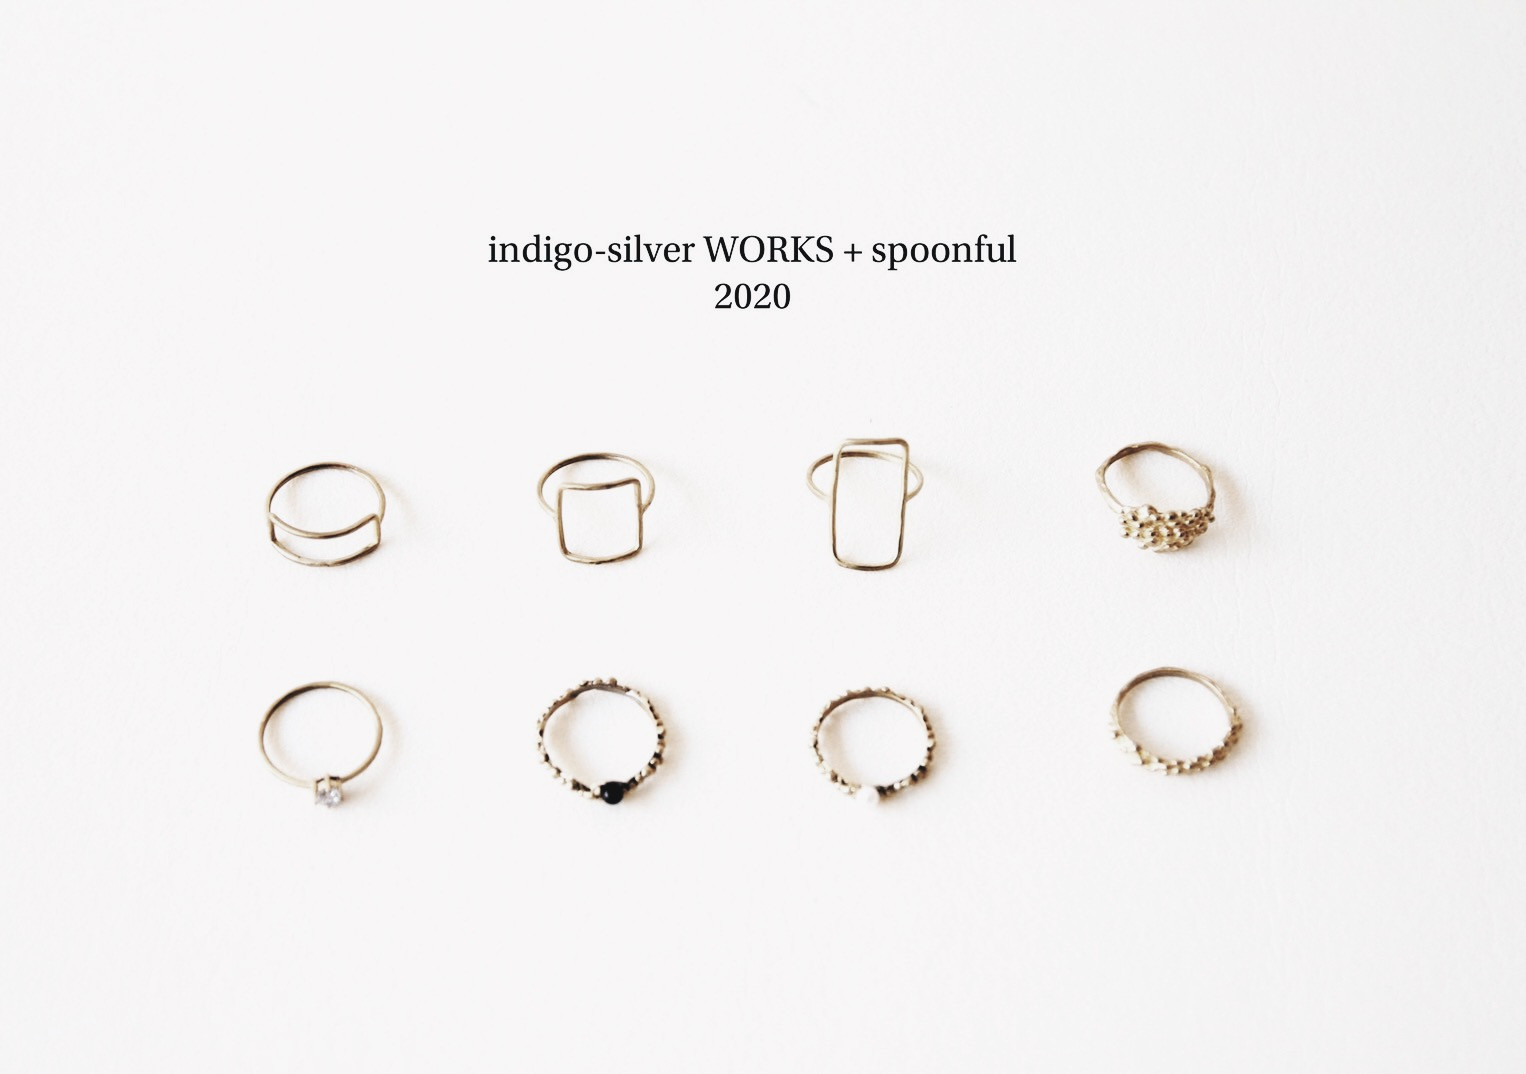 indigo-silver WORKS exhibition in spoonful 